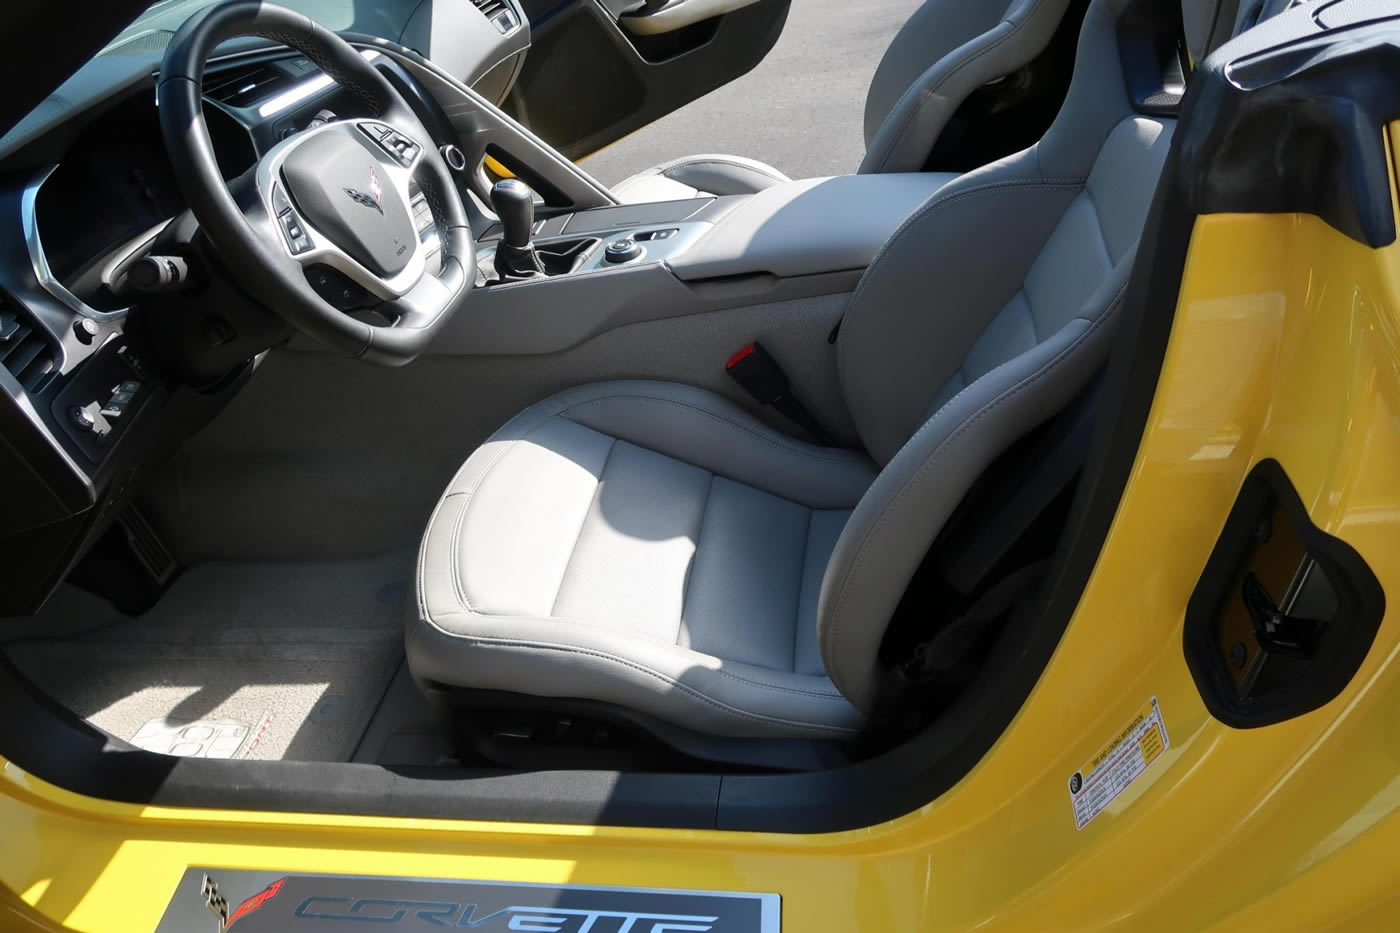 2019 Corvette Grand Sport Convertible in Corvette Racing Yellow